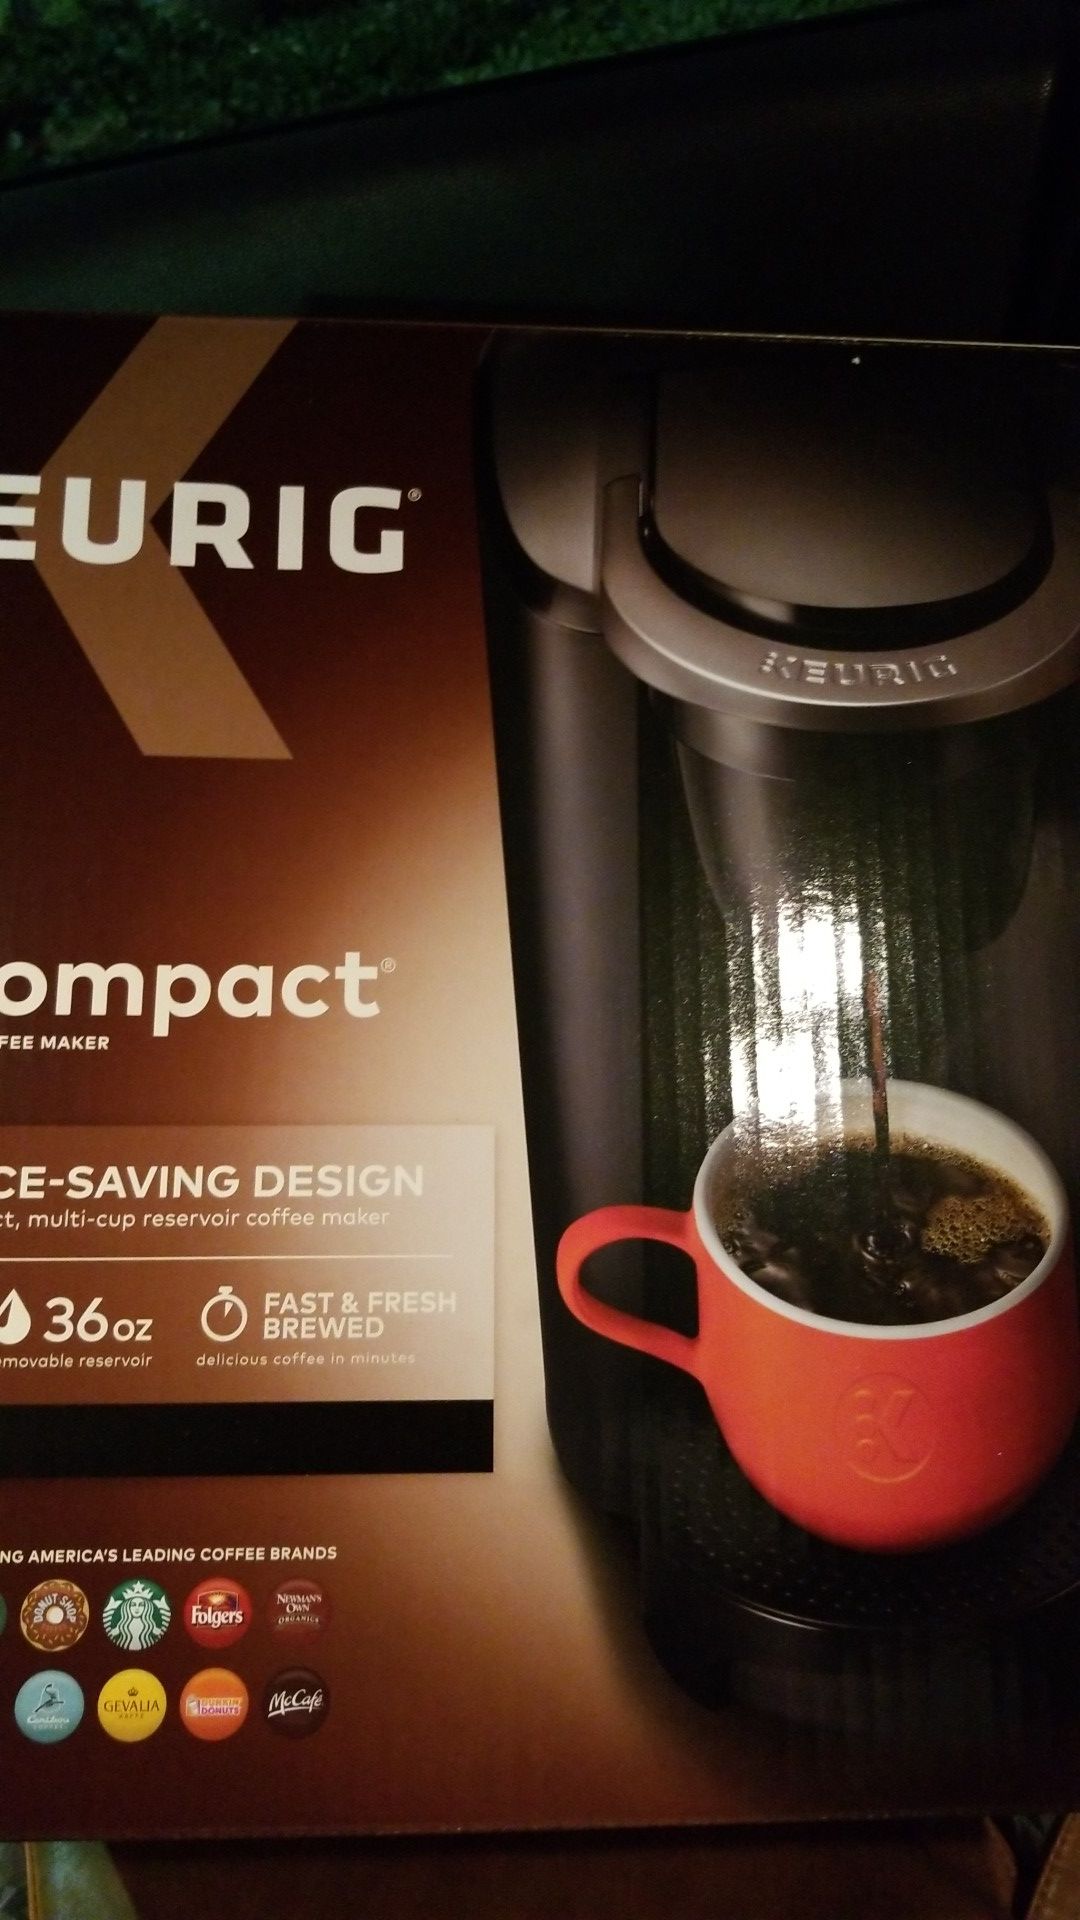 I have 2 Keurig, k- Compact single serve coffee maker